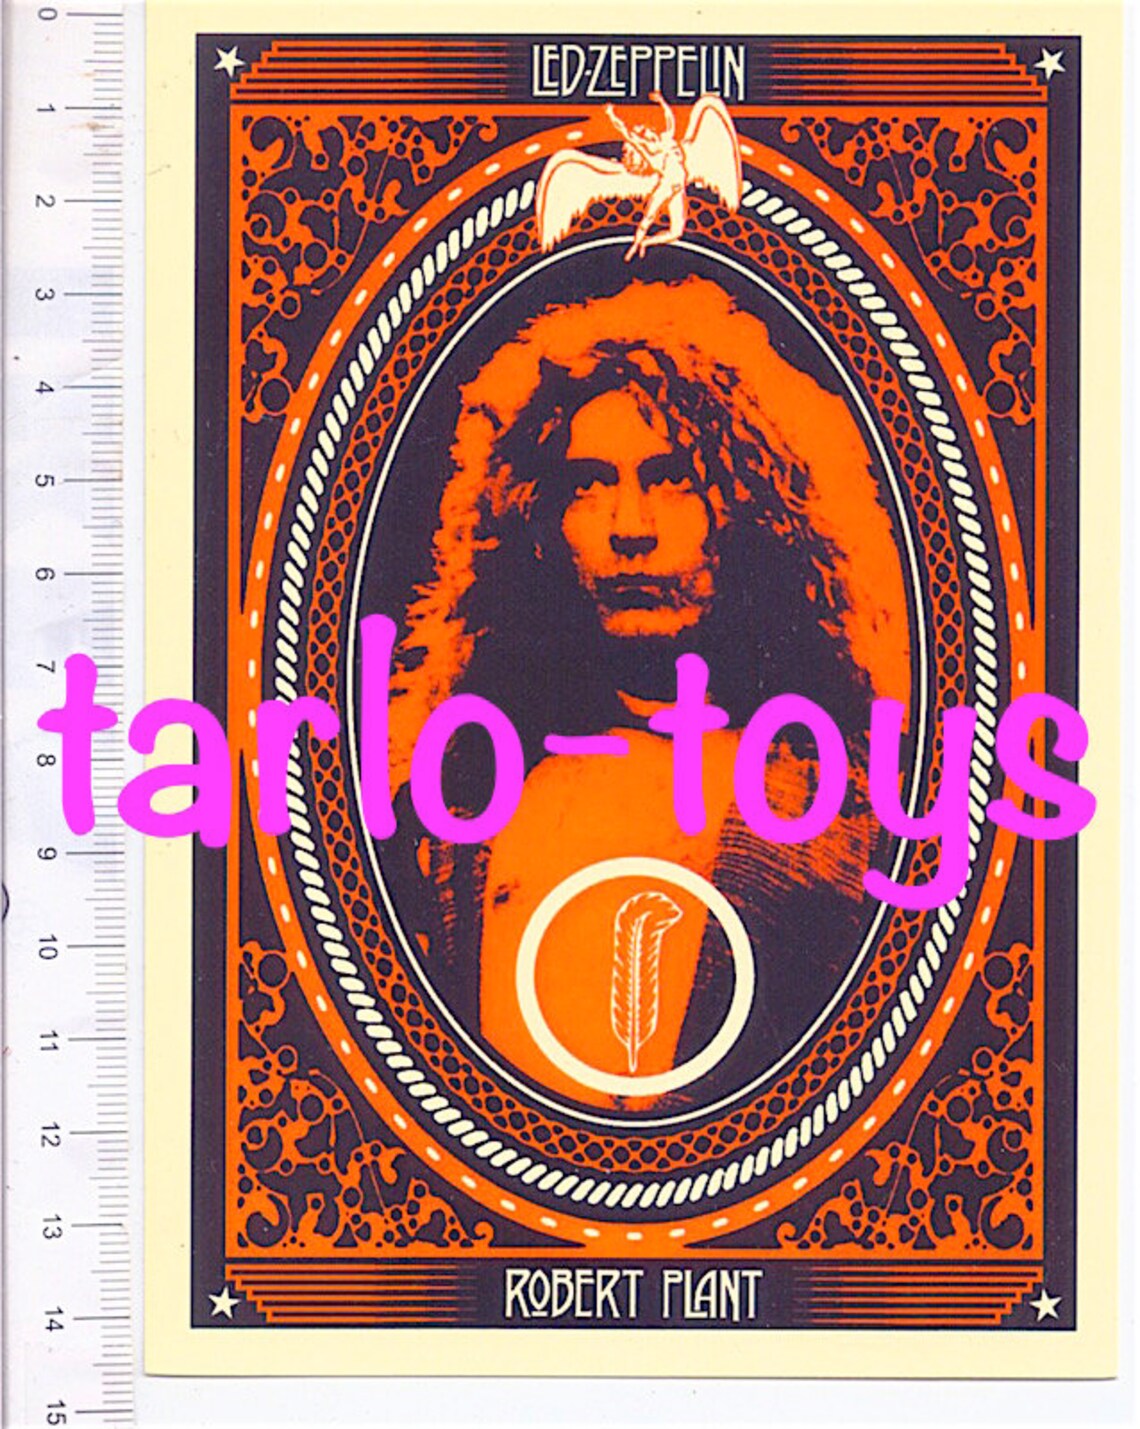 LED ZEPPELIN  Tarot card  Robert Plant image 0